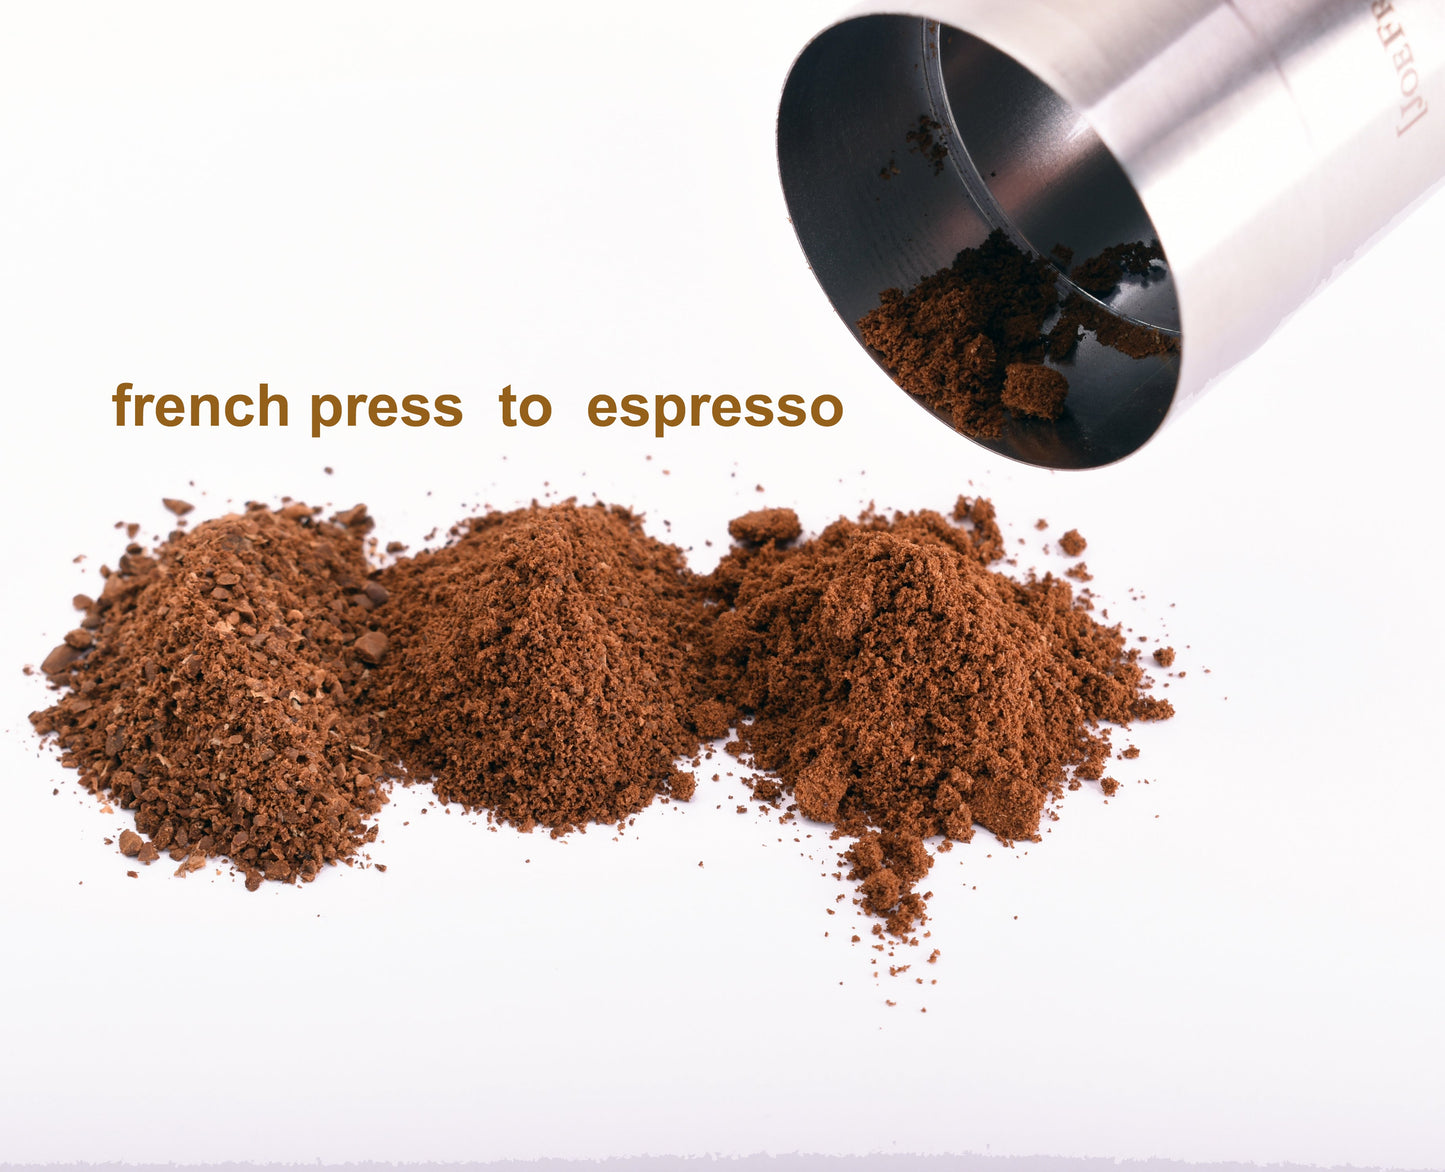 coffee hand grinder for espresso – french press to espresso